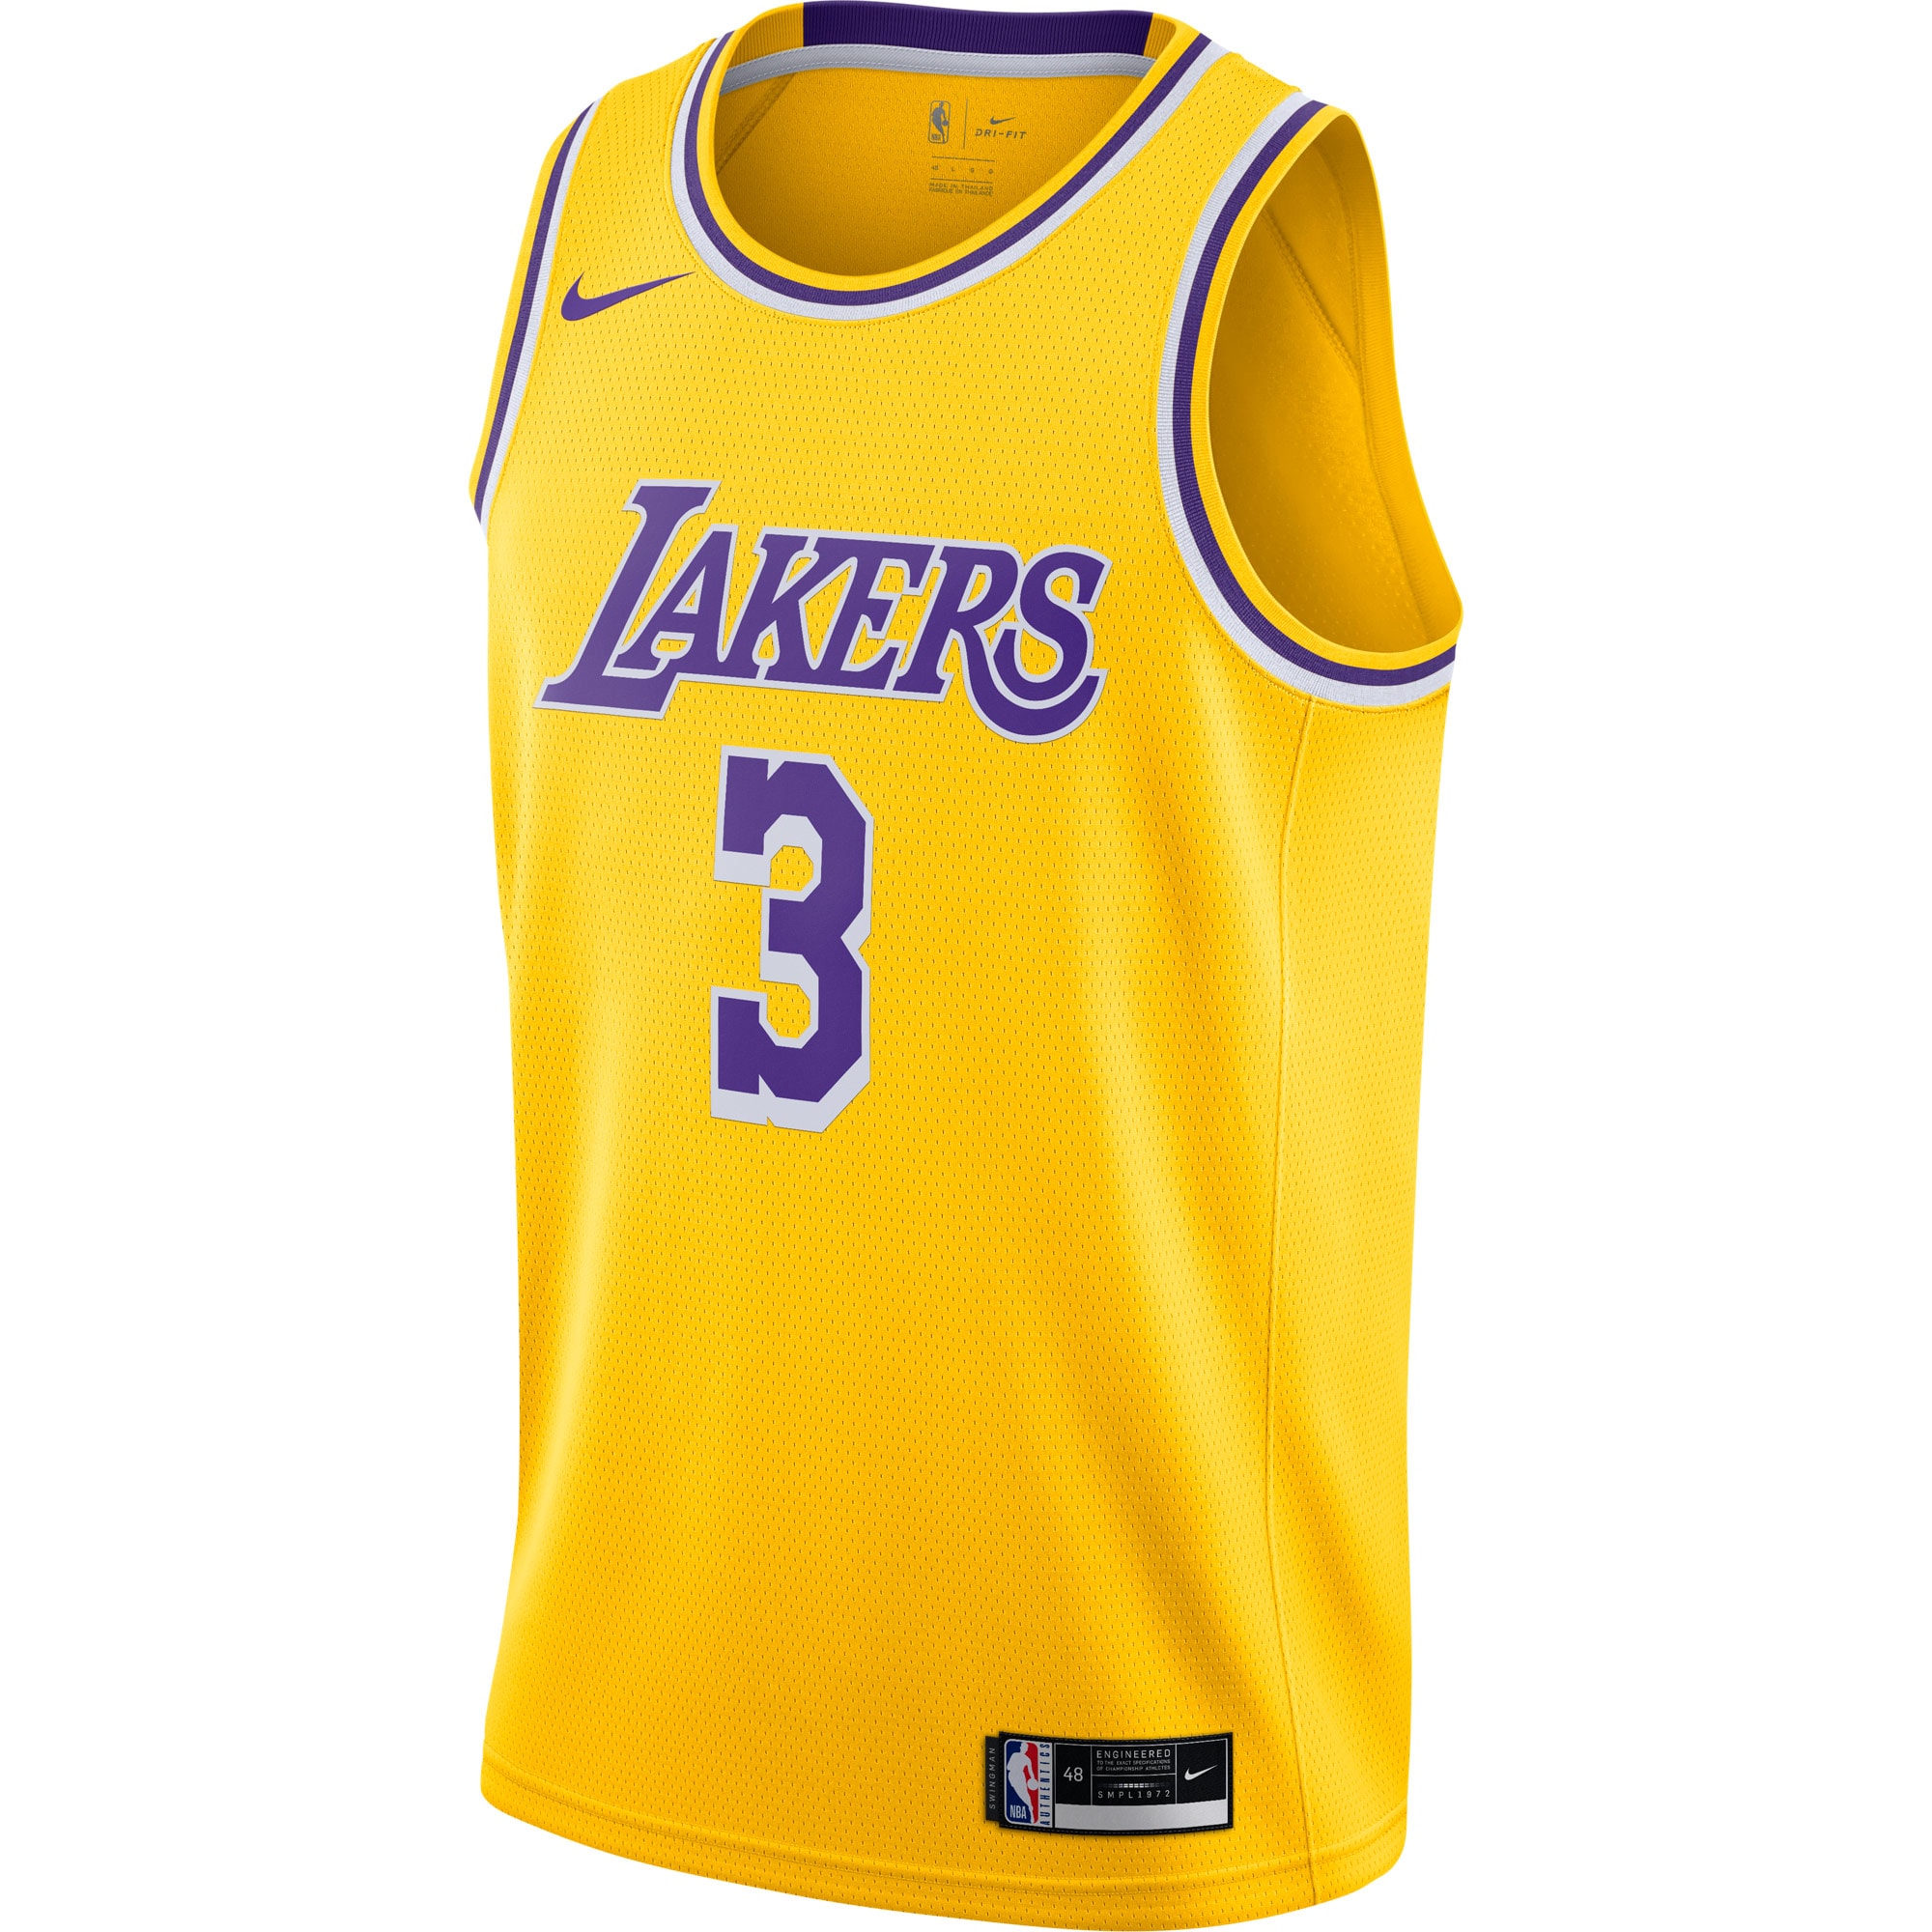 Men's Nike Anthony Davis Gold Los Angeles Lakers Swingman Jersey - Icon Edition - image 2 of 3